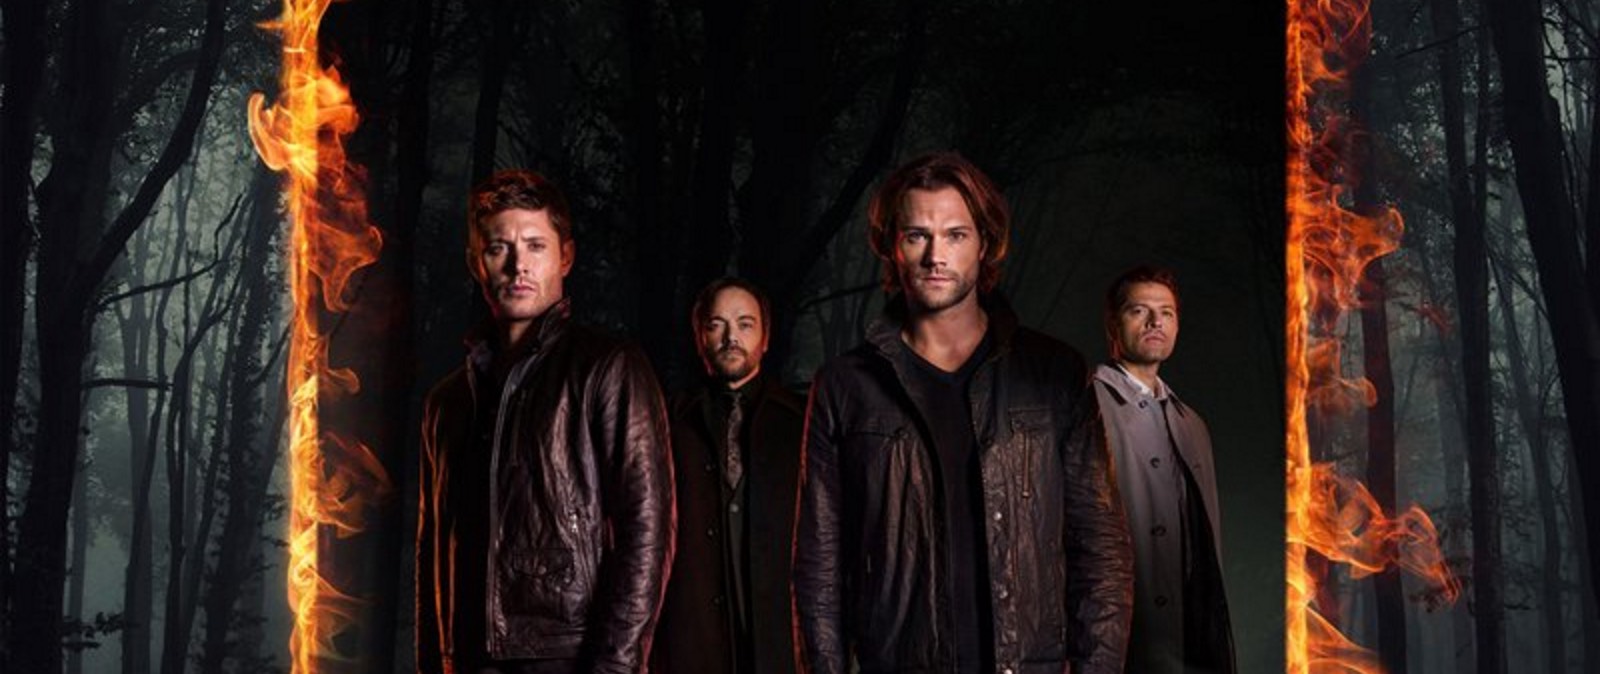 Supernatural Season 13 is finally here!